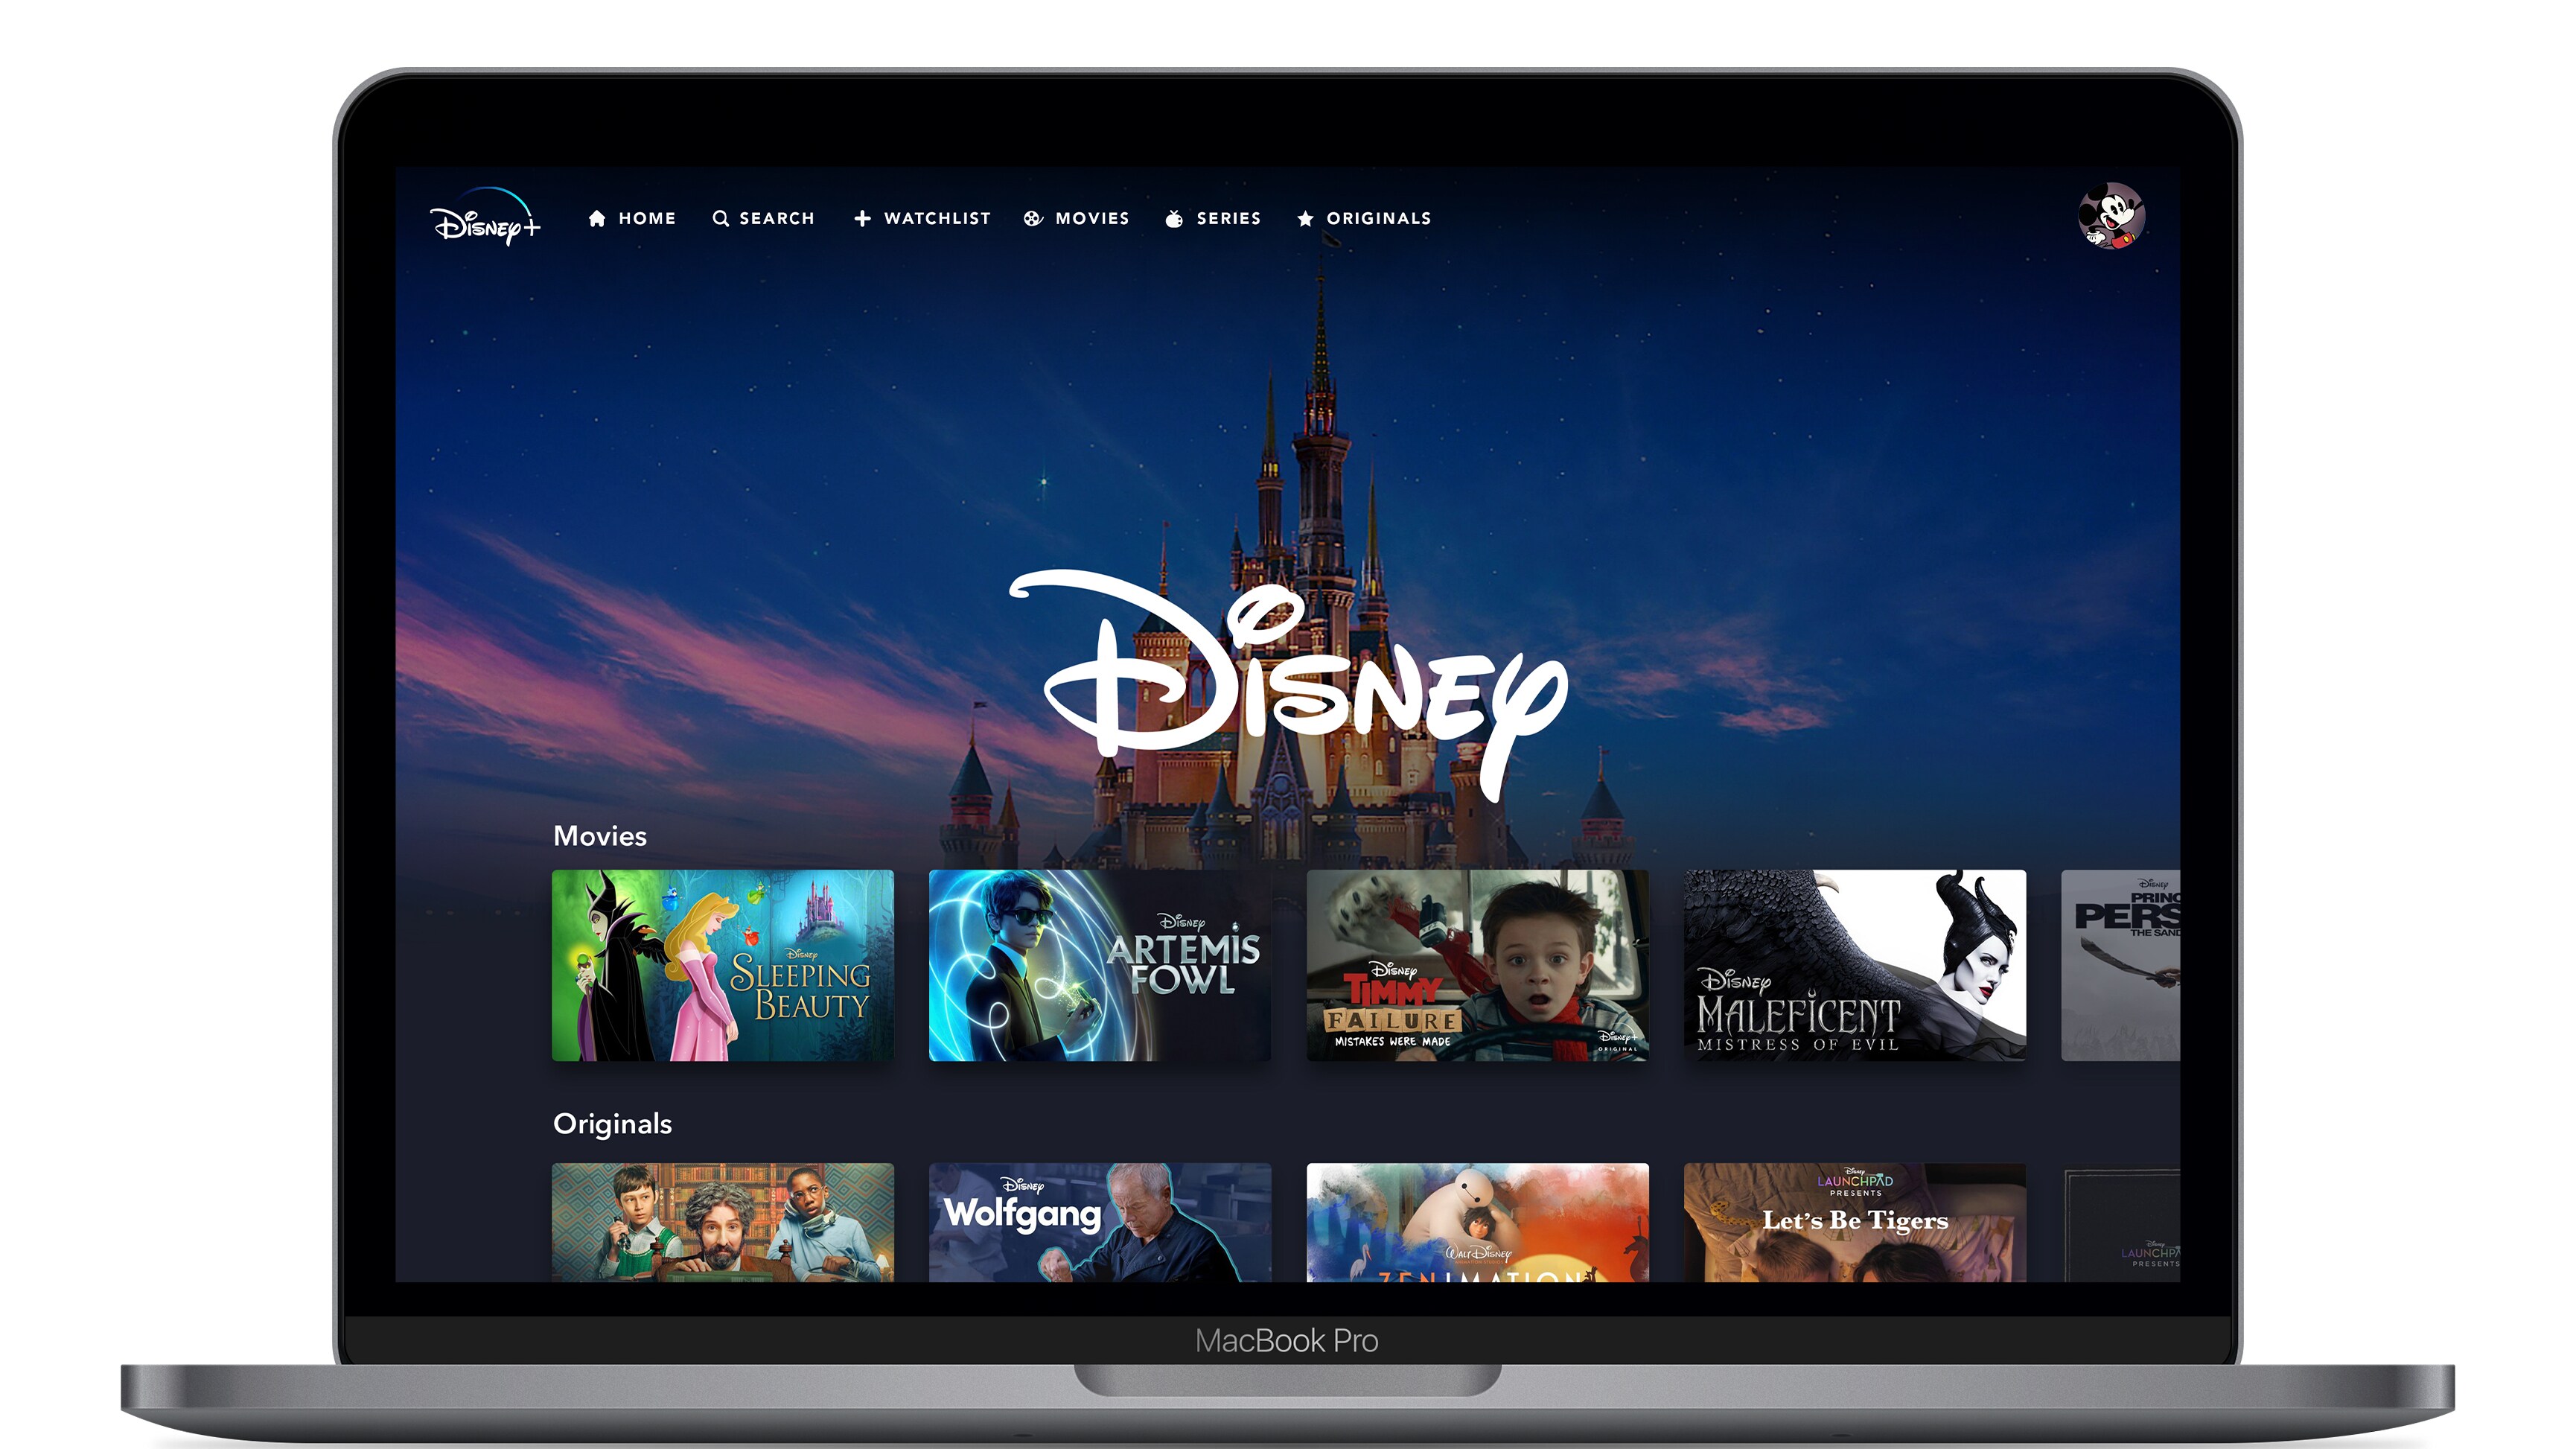 Disney+ Brand Landing Page on Web Device